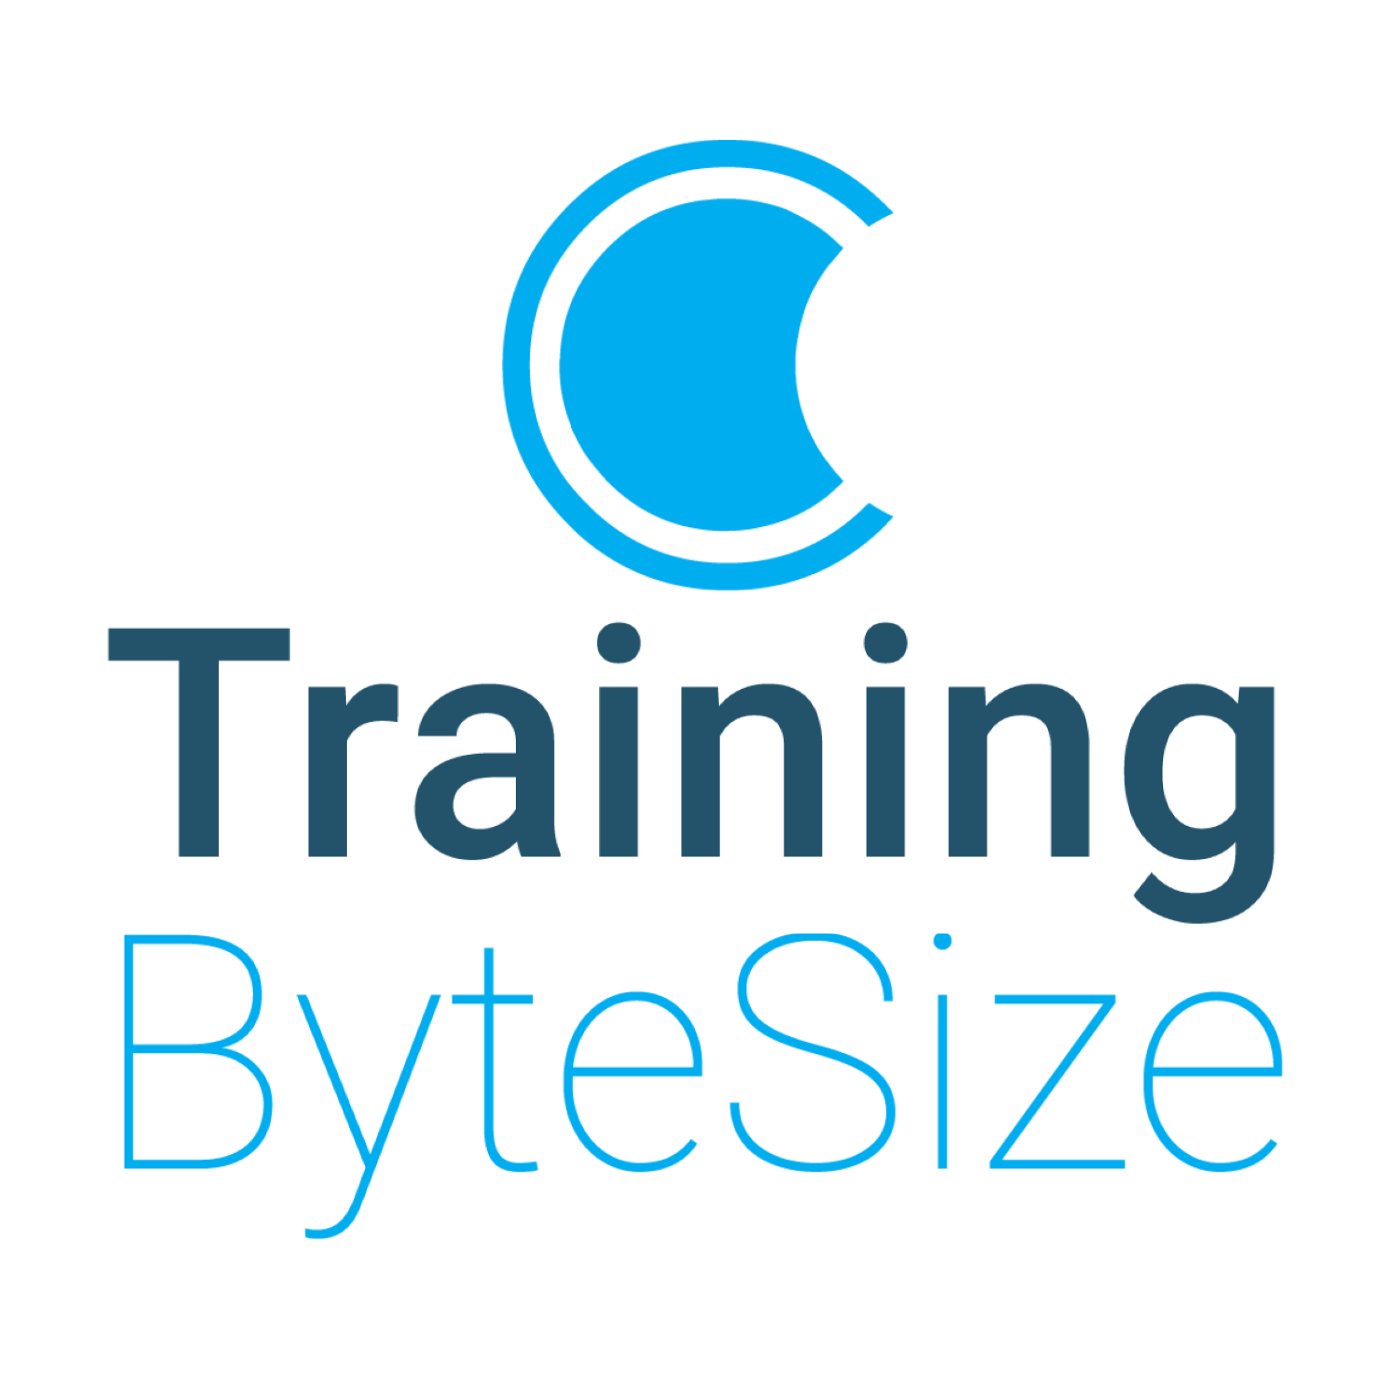 Training Byte Size Ltd